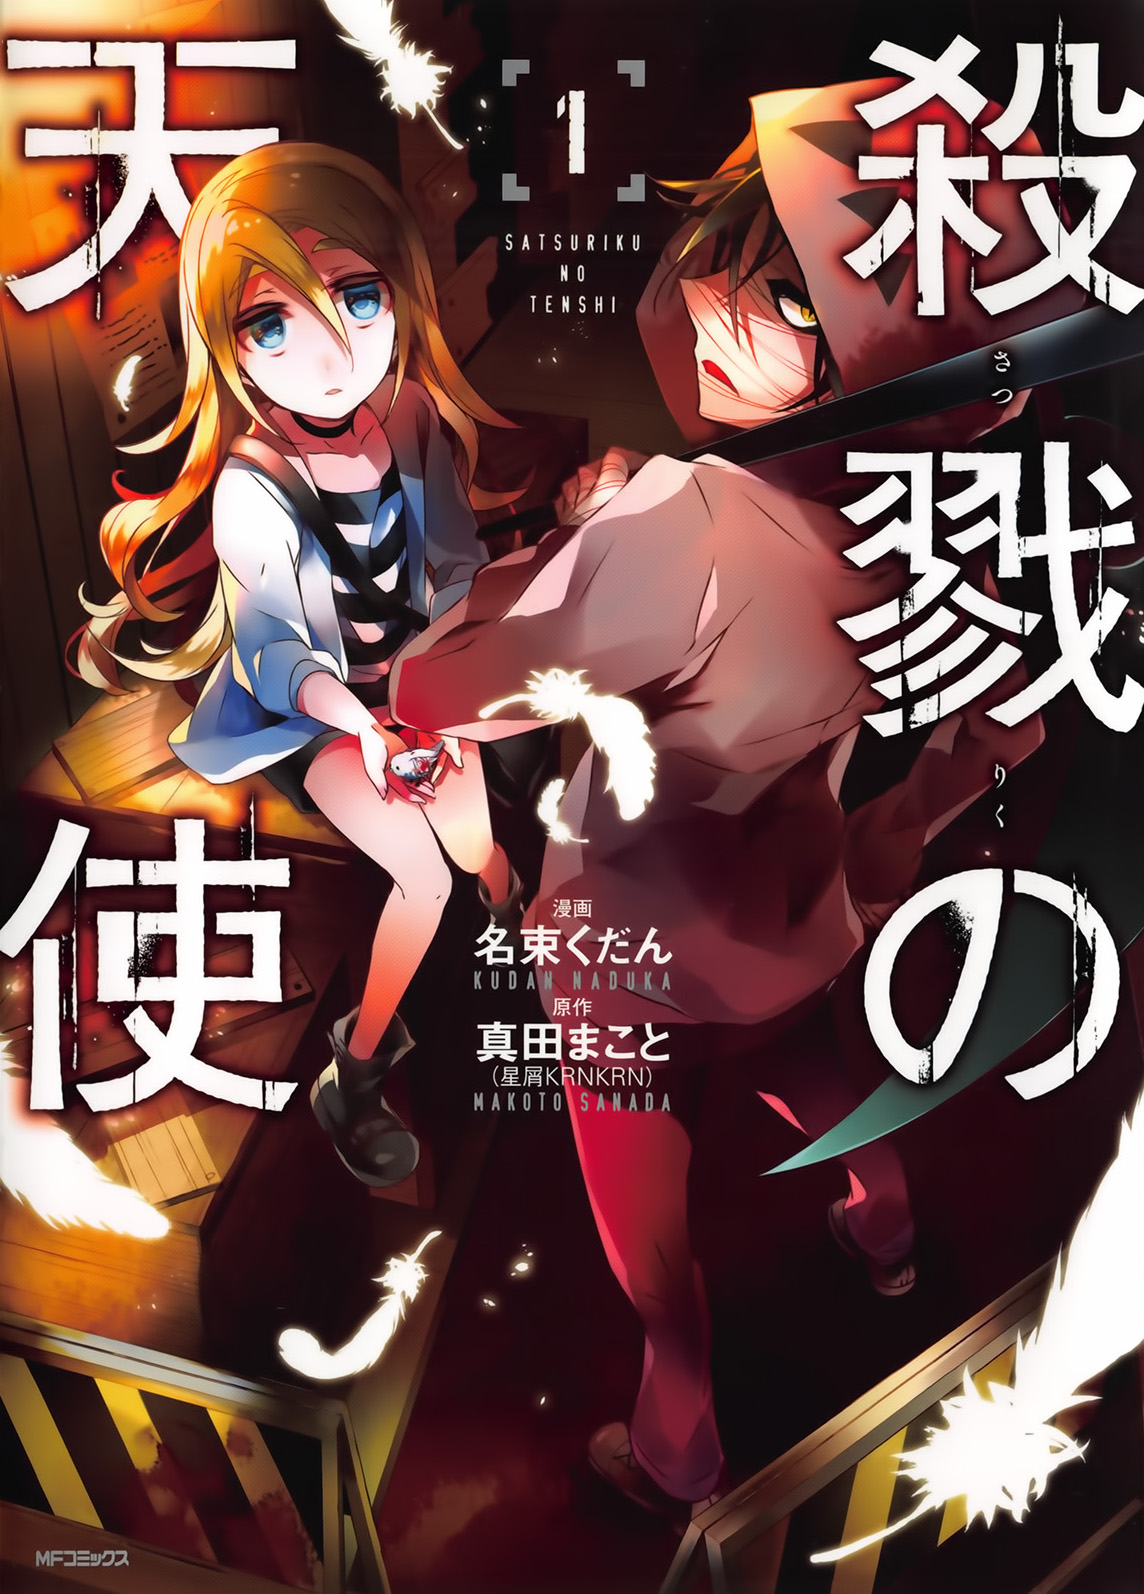 Can Angels Do This Manga Angels of Death (Manga) | Satsuriku no Tenshi Wiki | Fandom